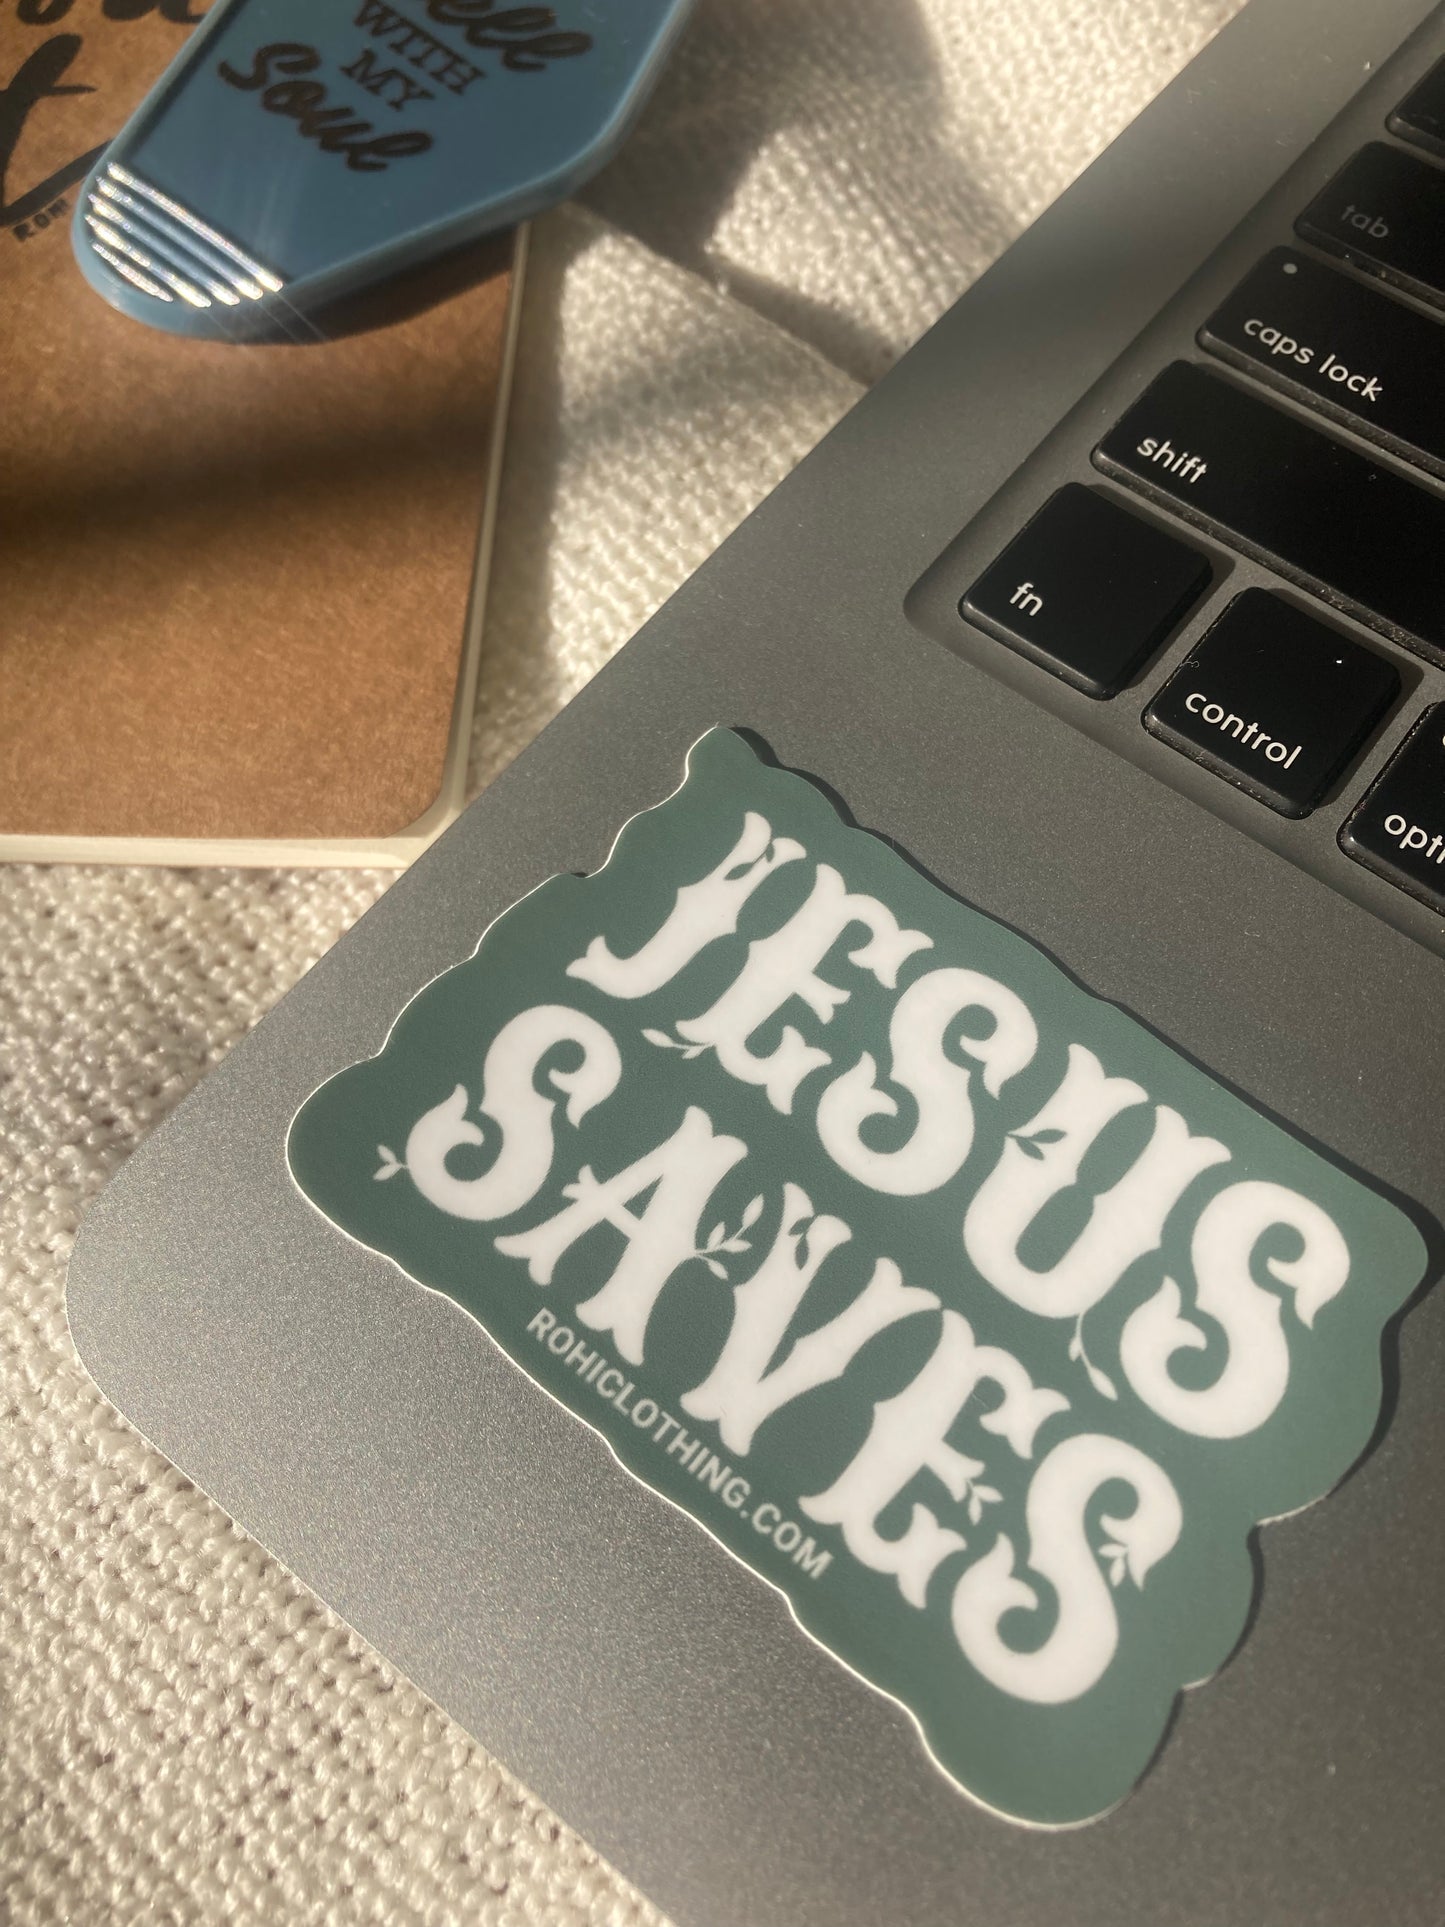 “JESUS SAVES” sticker